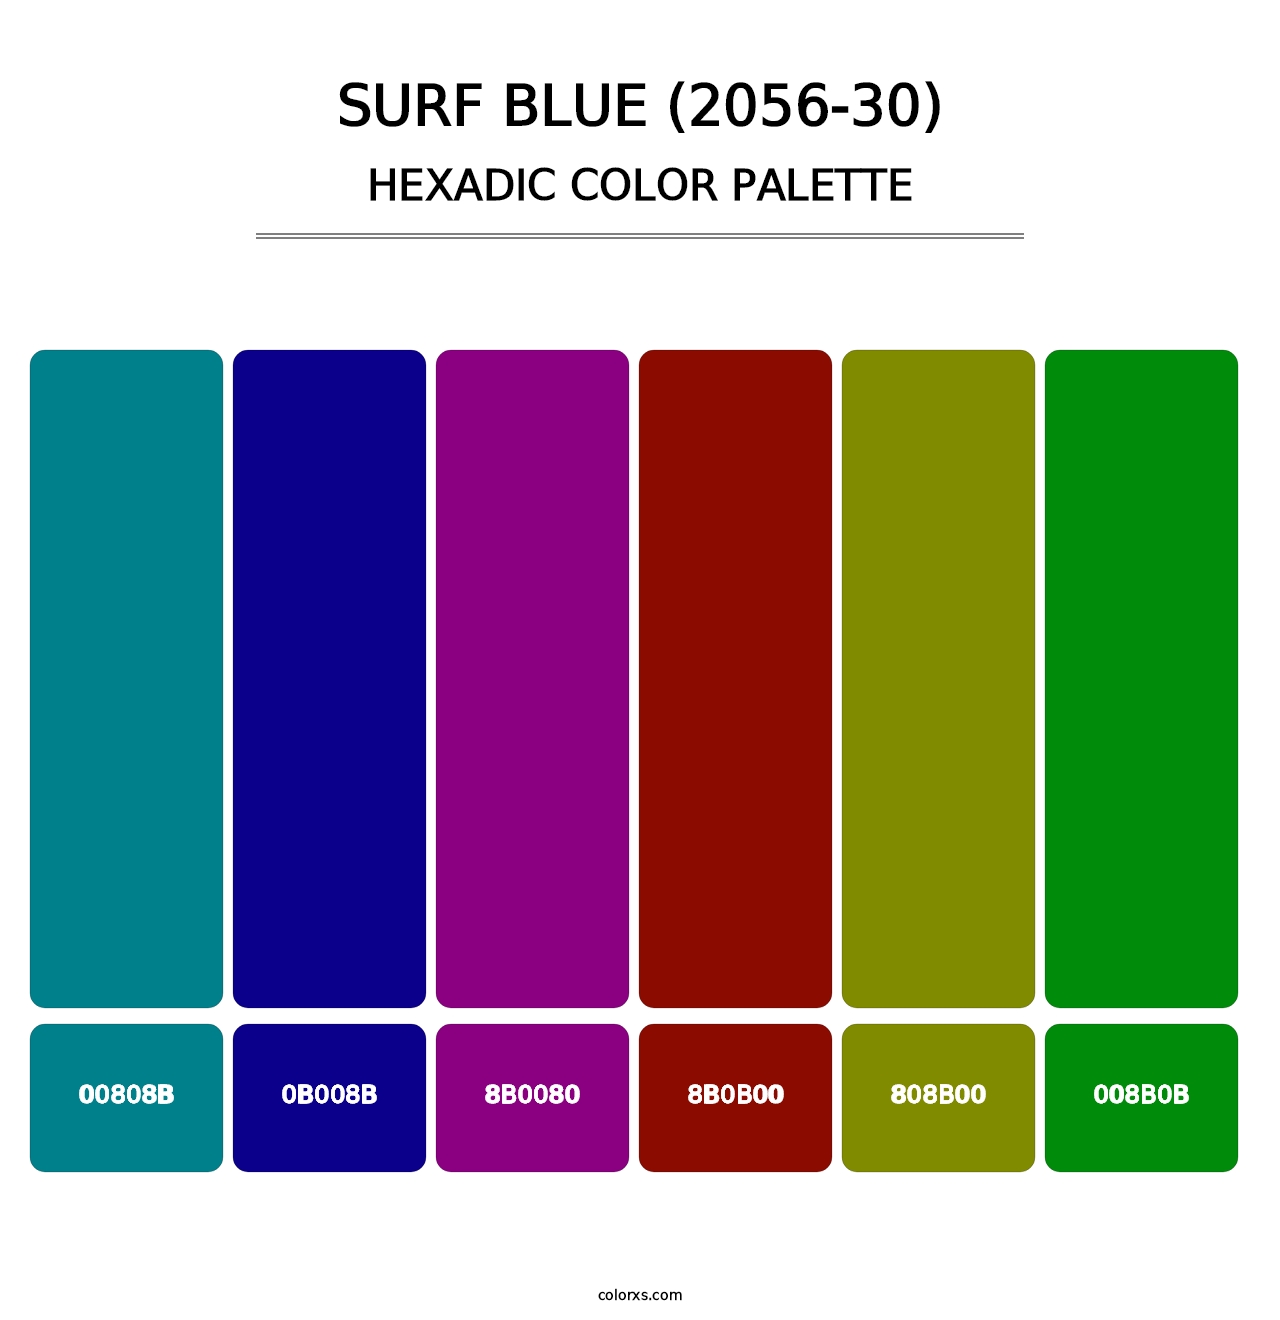 Surf Blue (2056-30) - Hexadic Color Palette